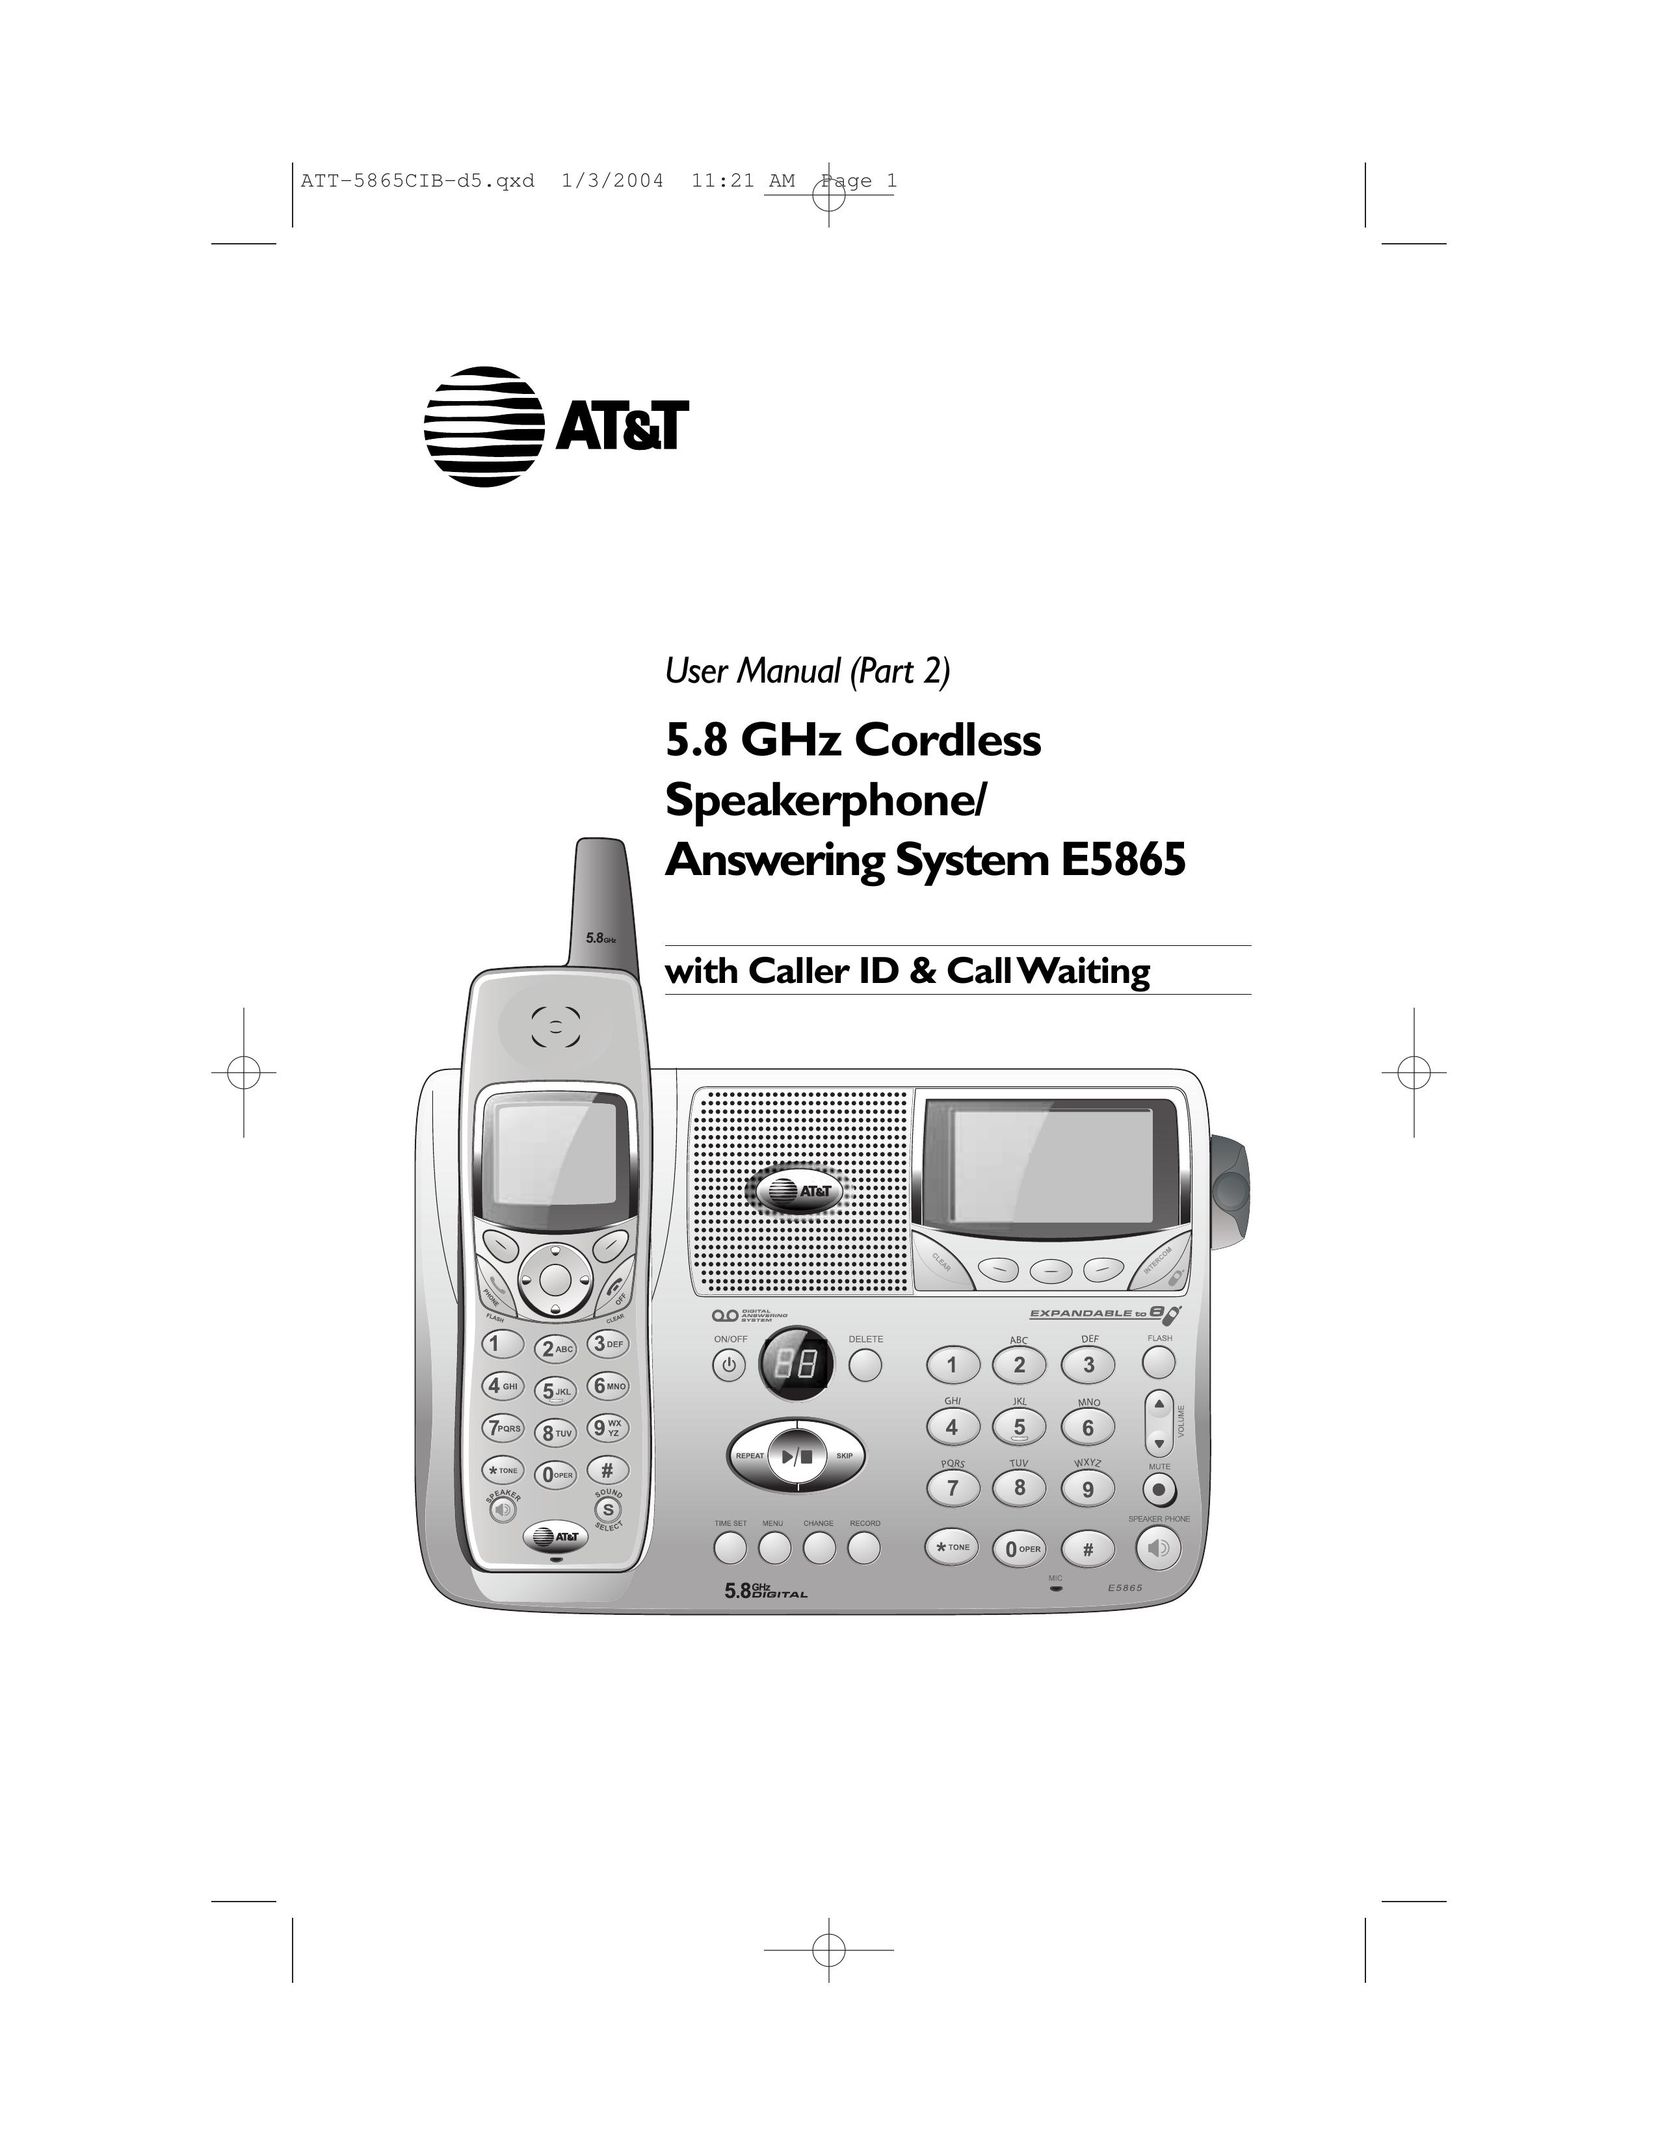 AT&T E5865 Answering Machine User Manual